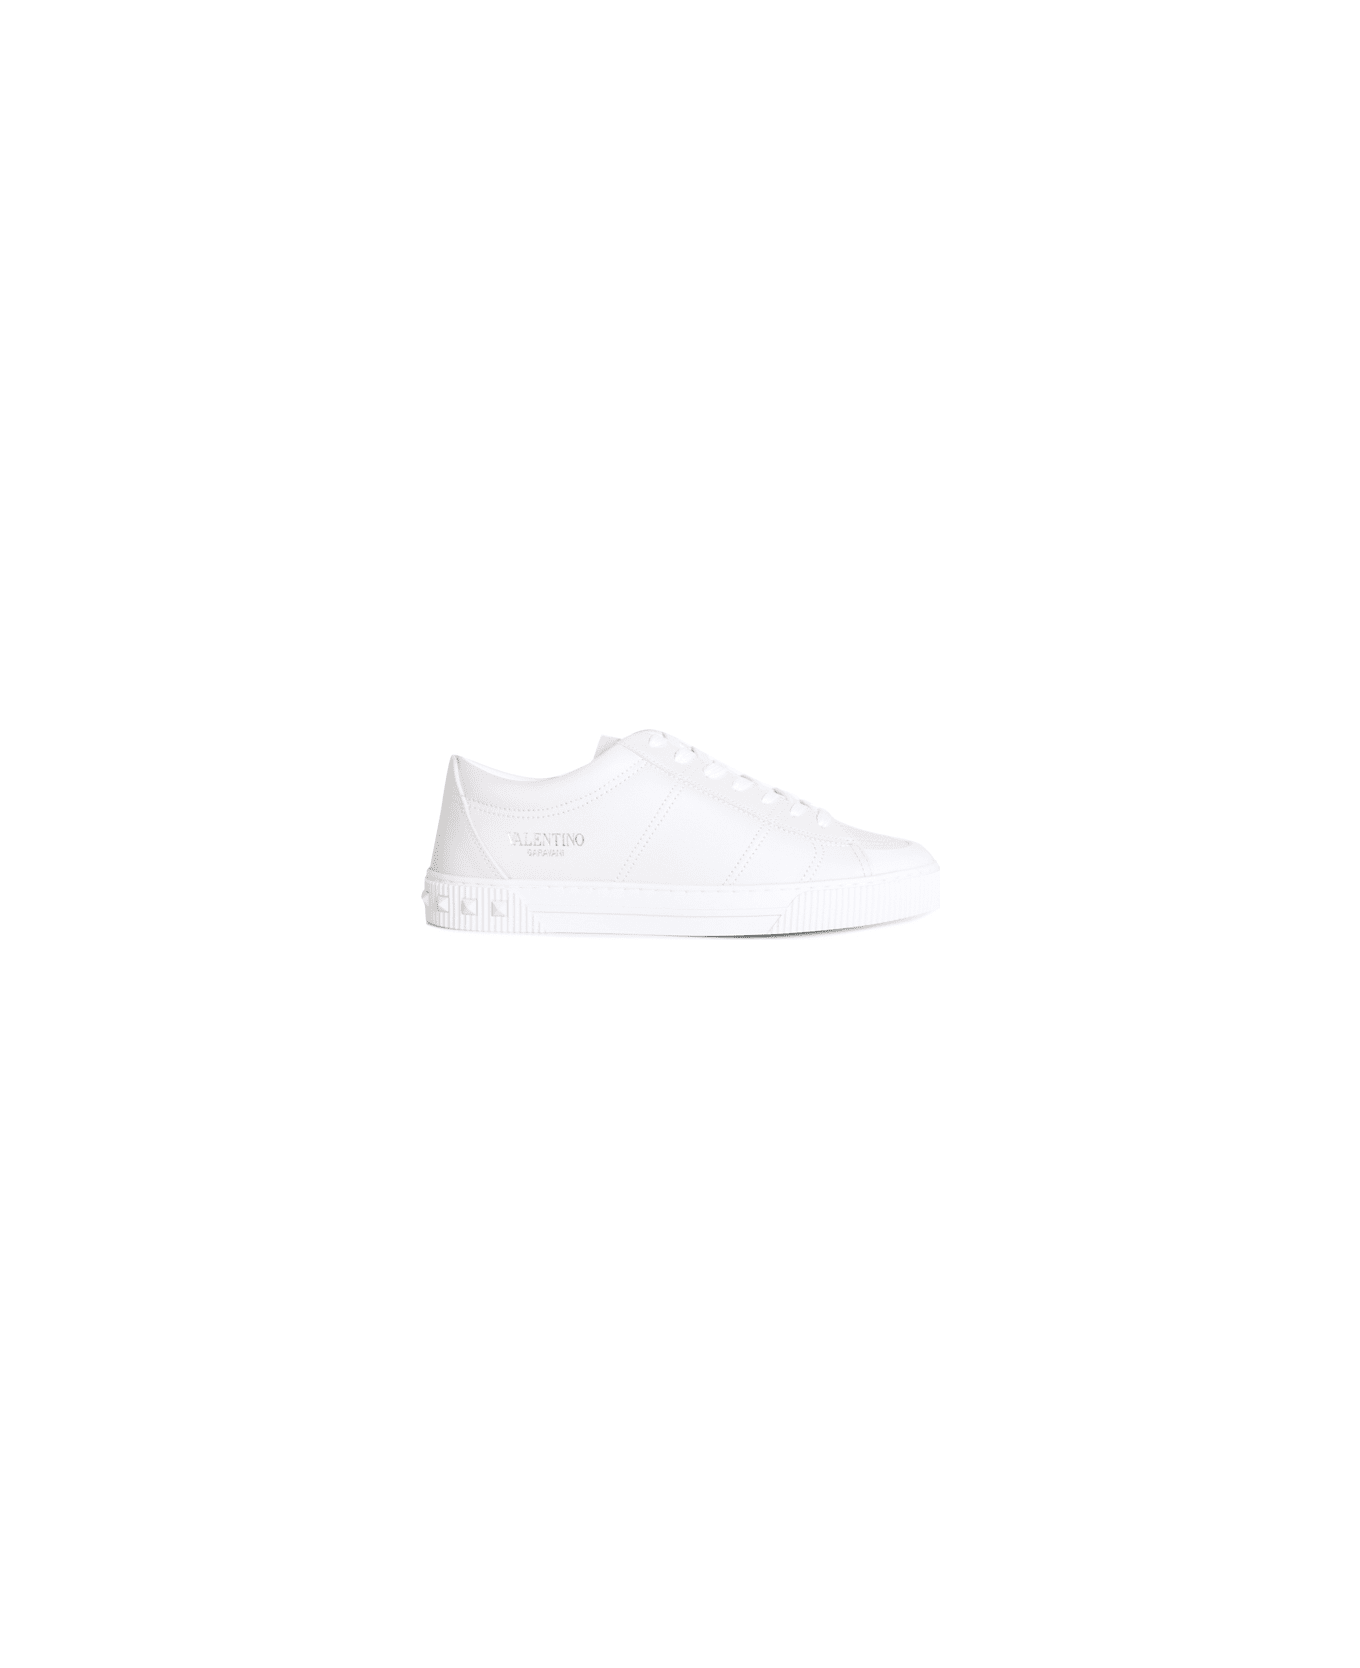 Valentino Garavani Sneakers With Rockstud Details - White